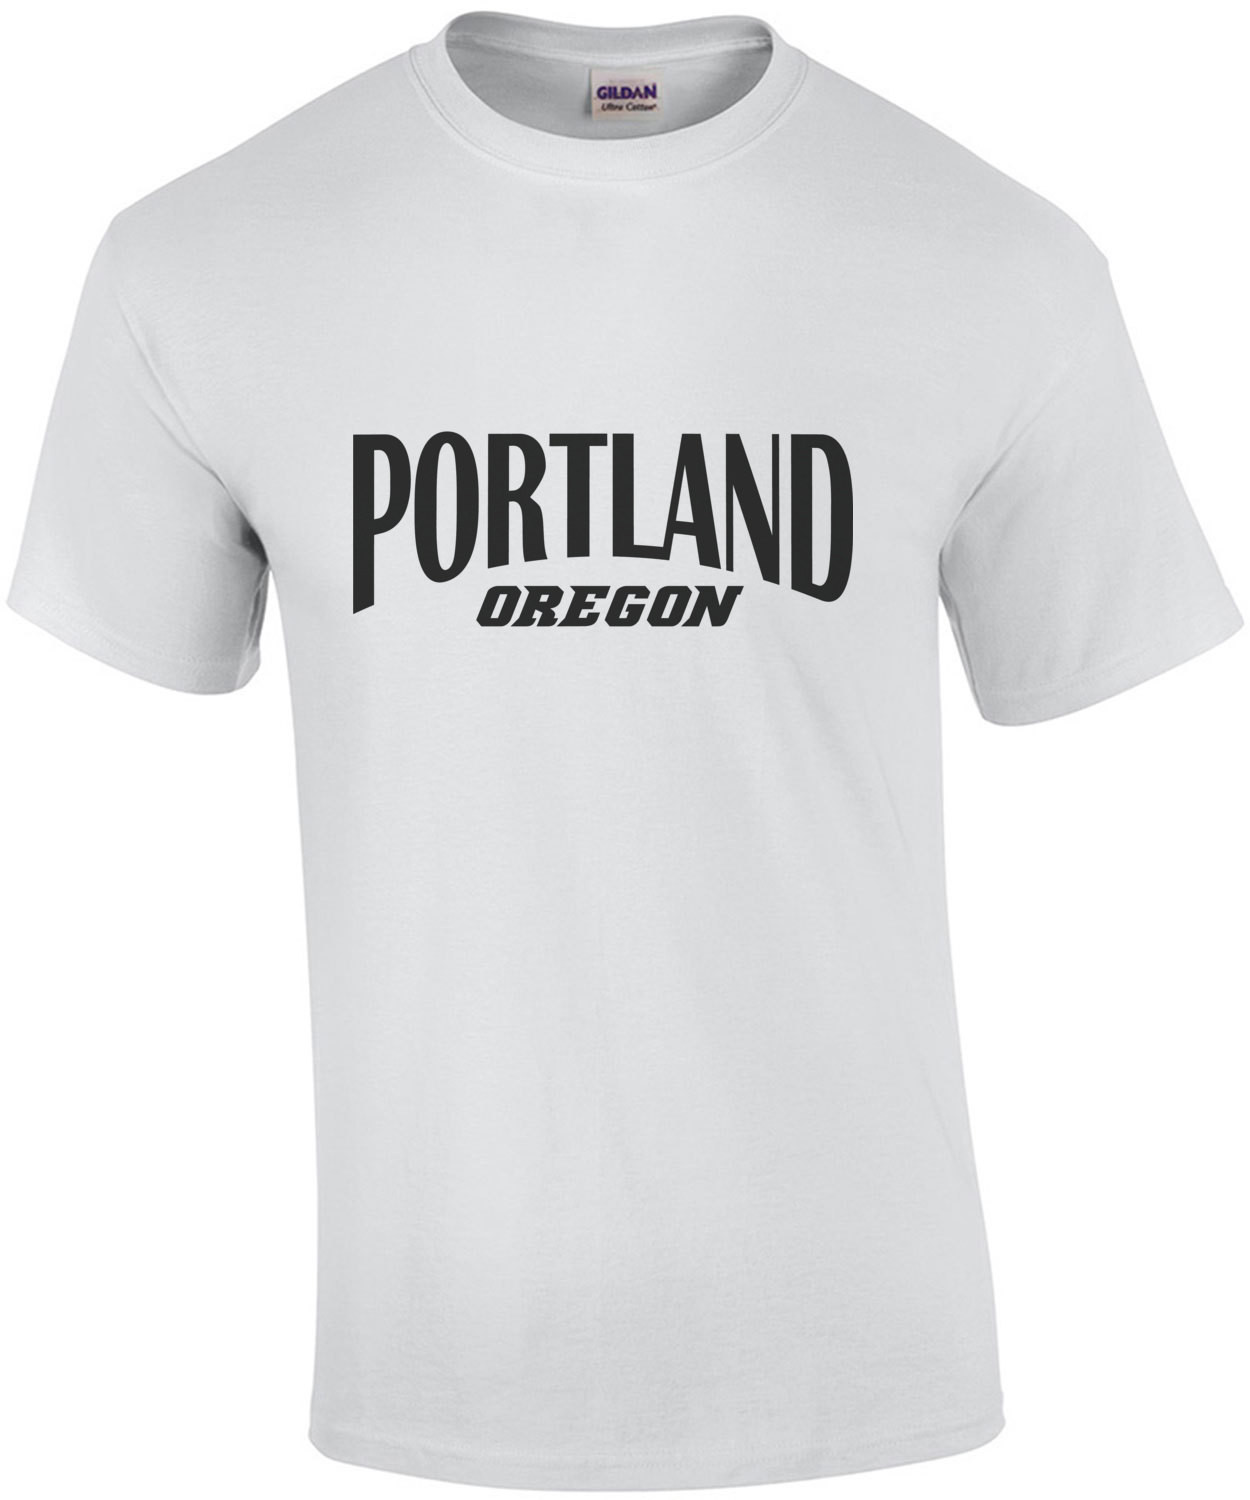 Portland Oregon T-Shirt